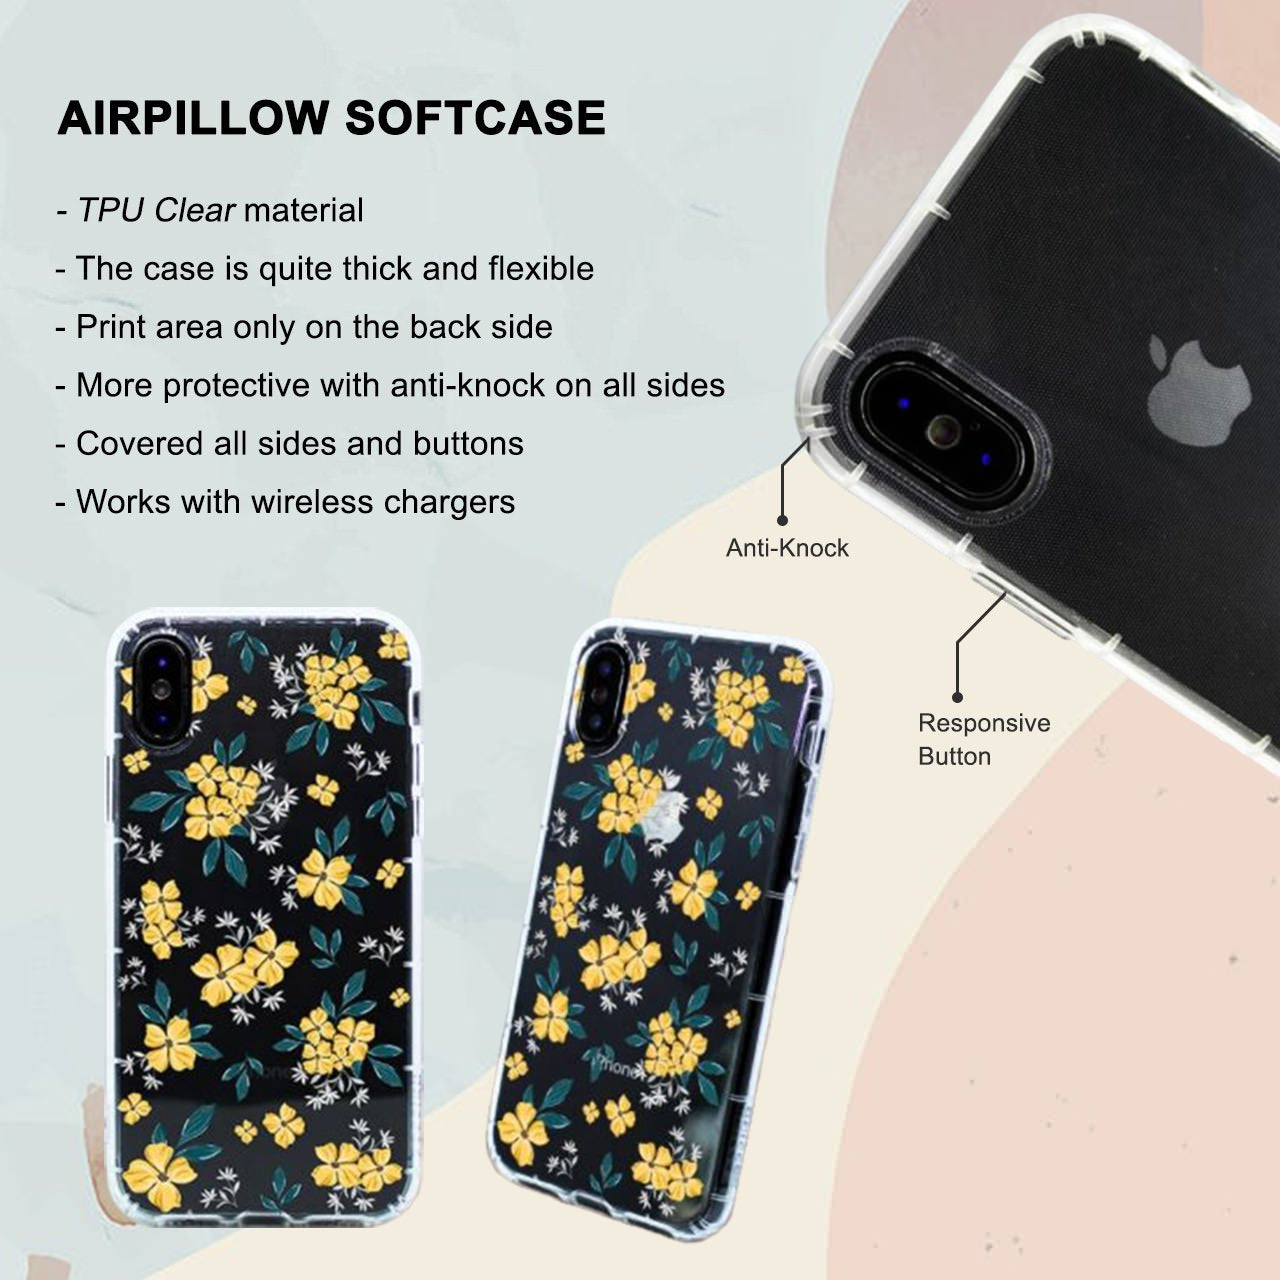 Chibi Robin iPhone 6 / 6s Plus Case